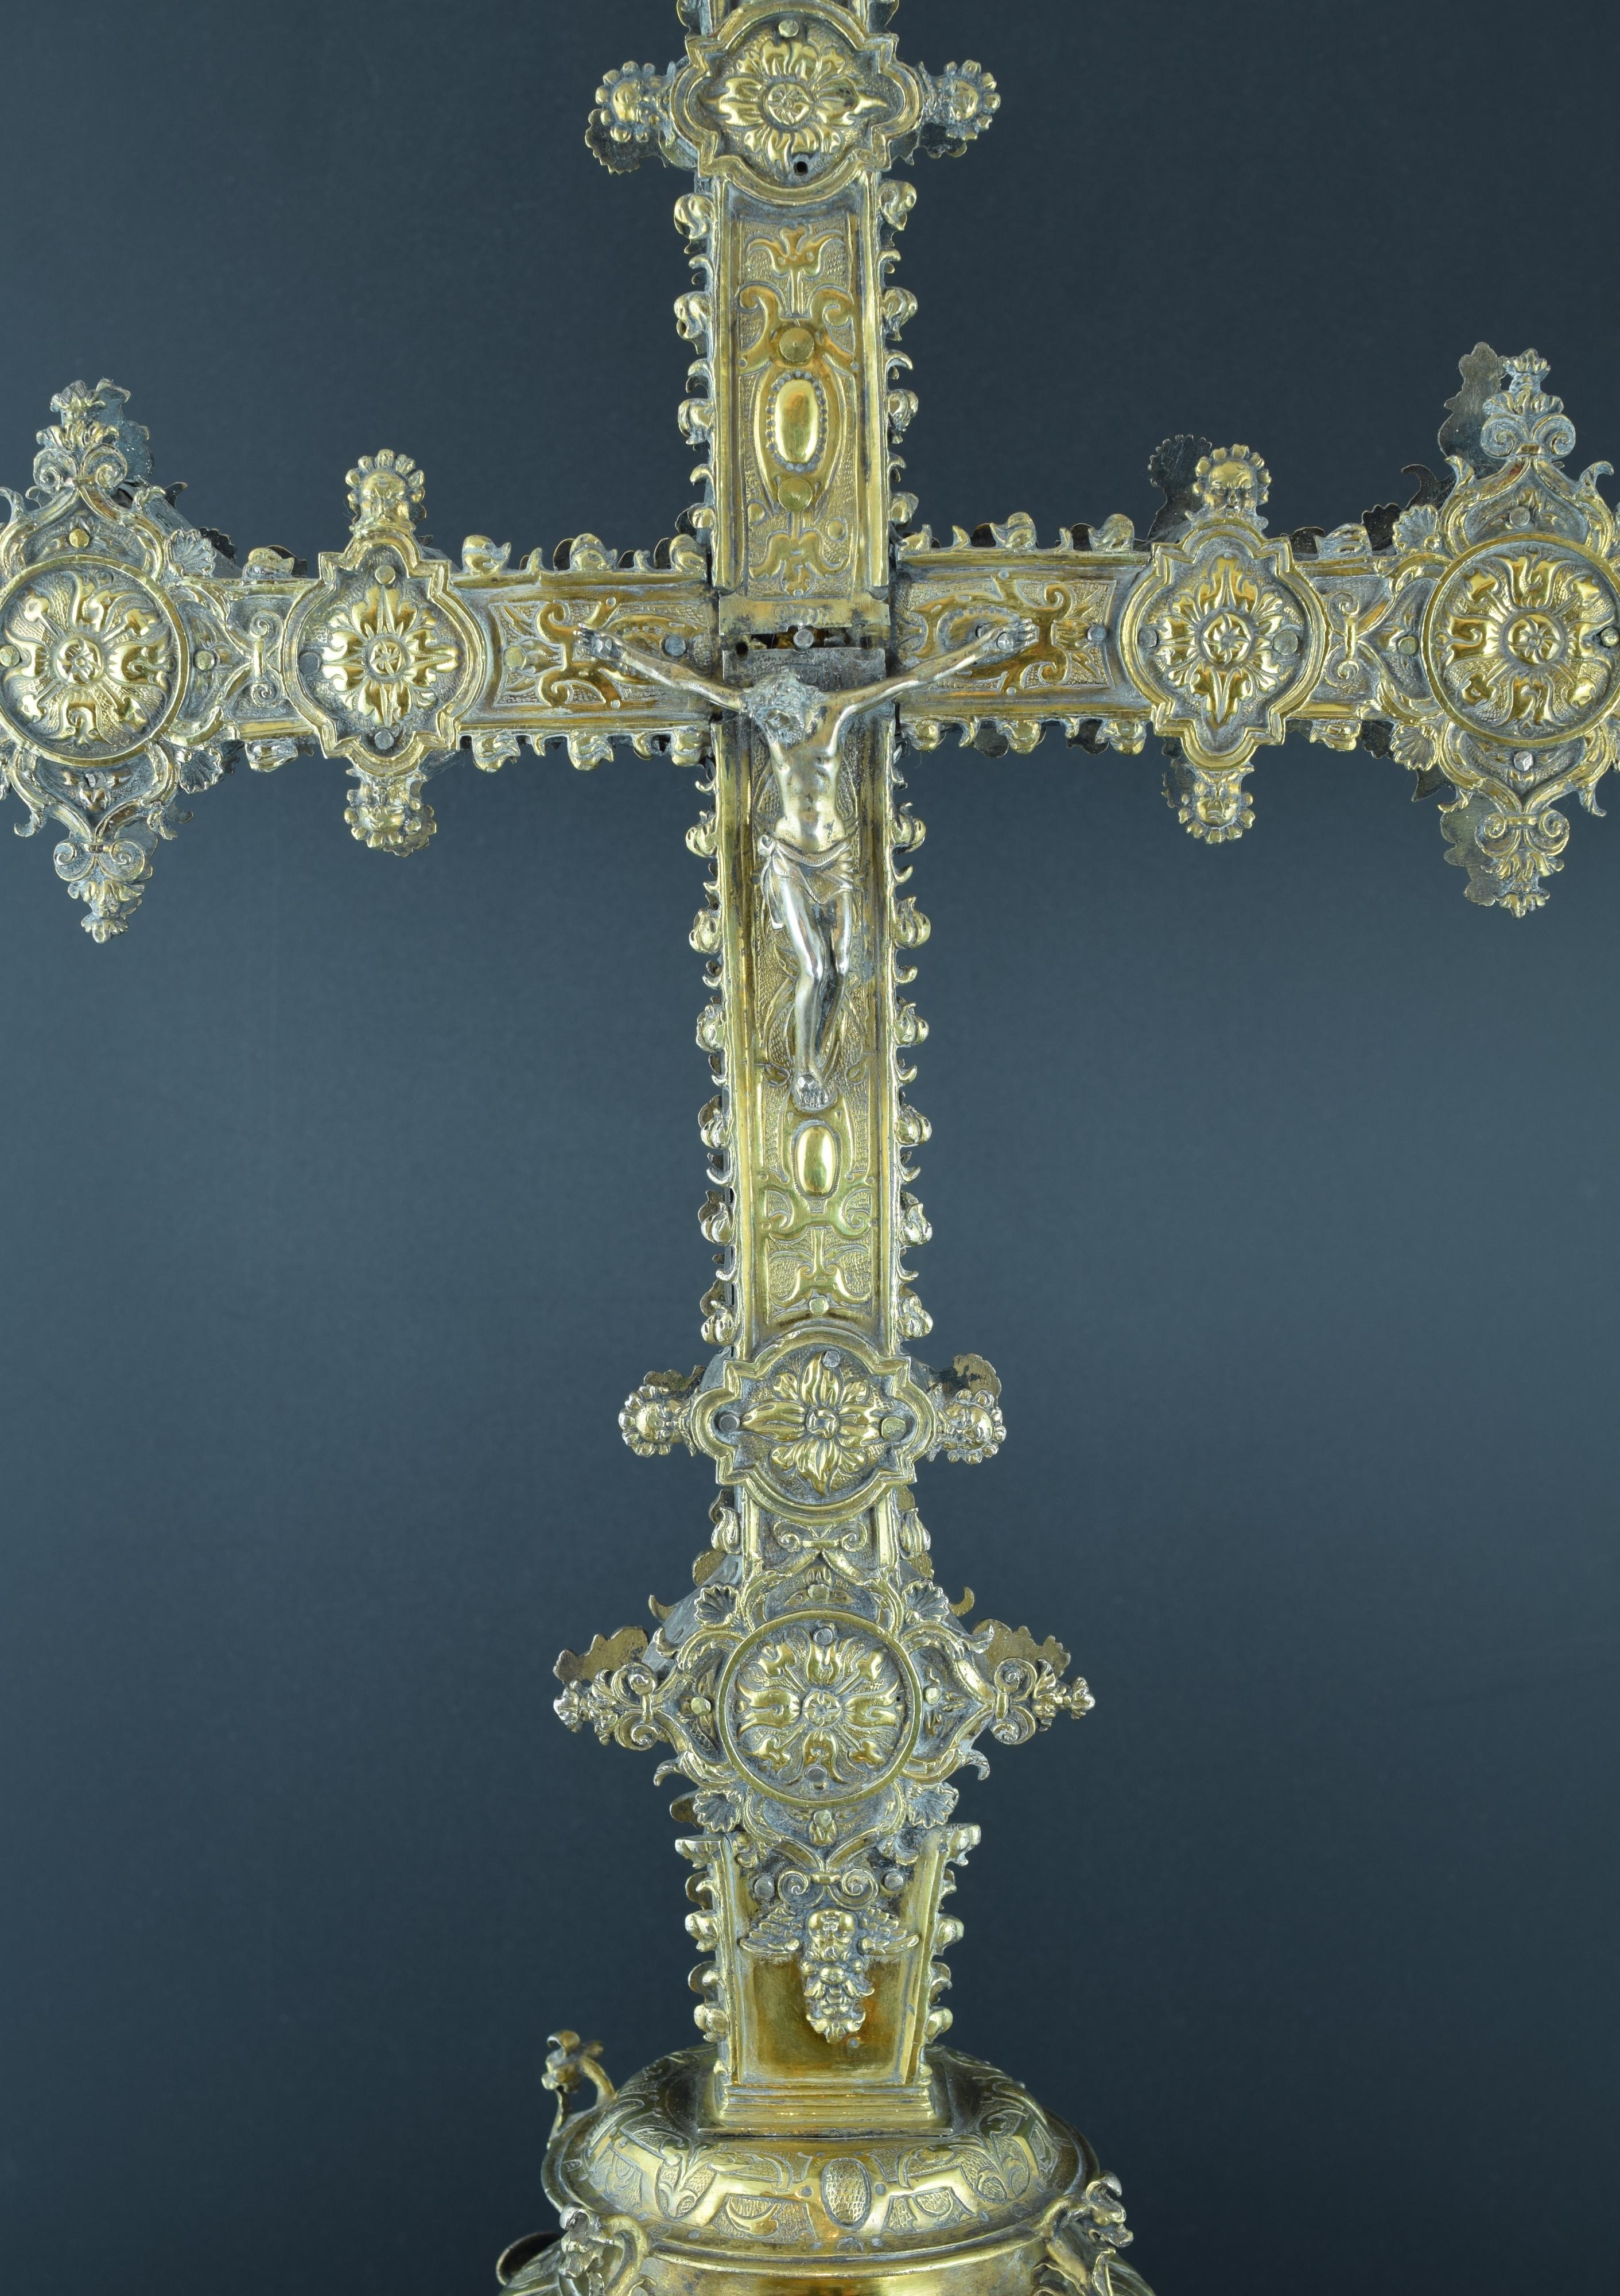 16th century cross